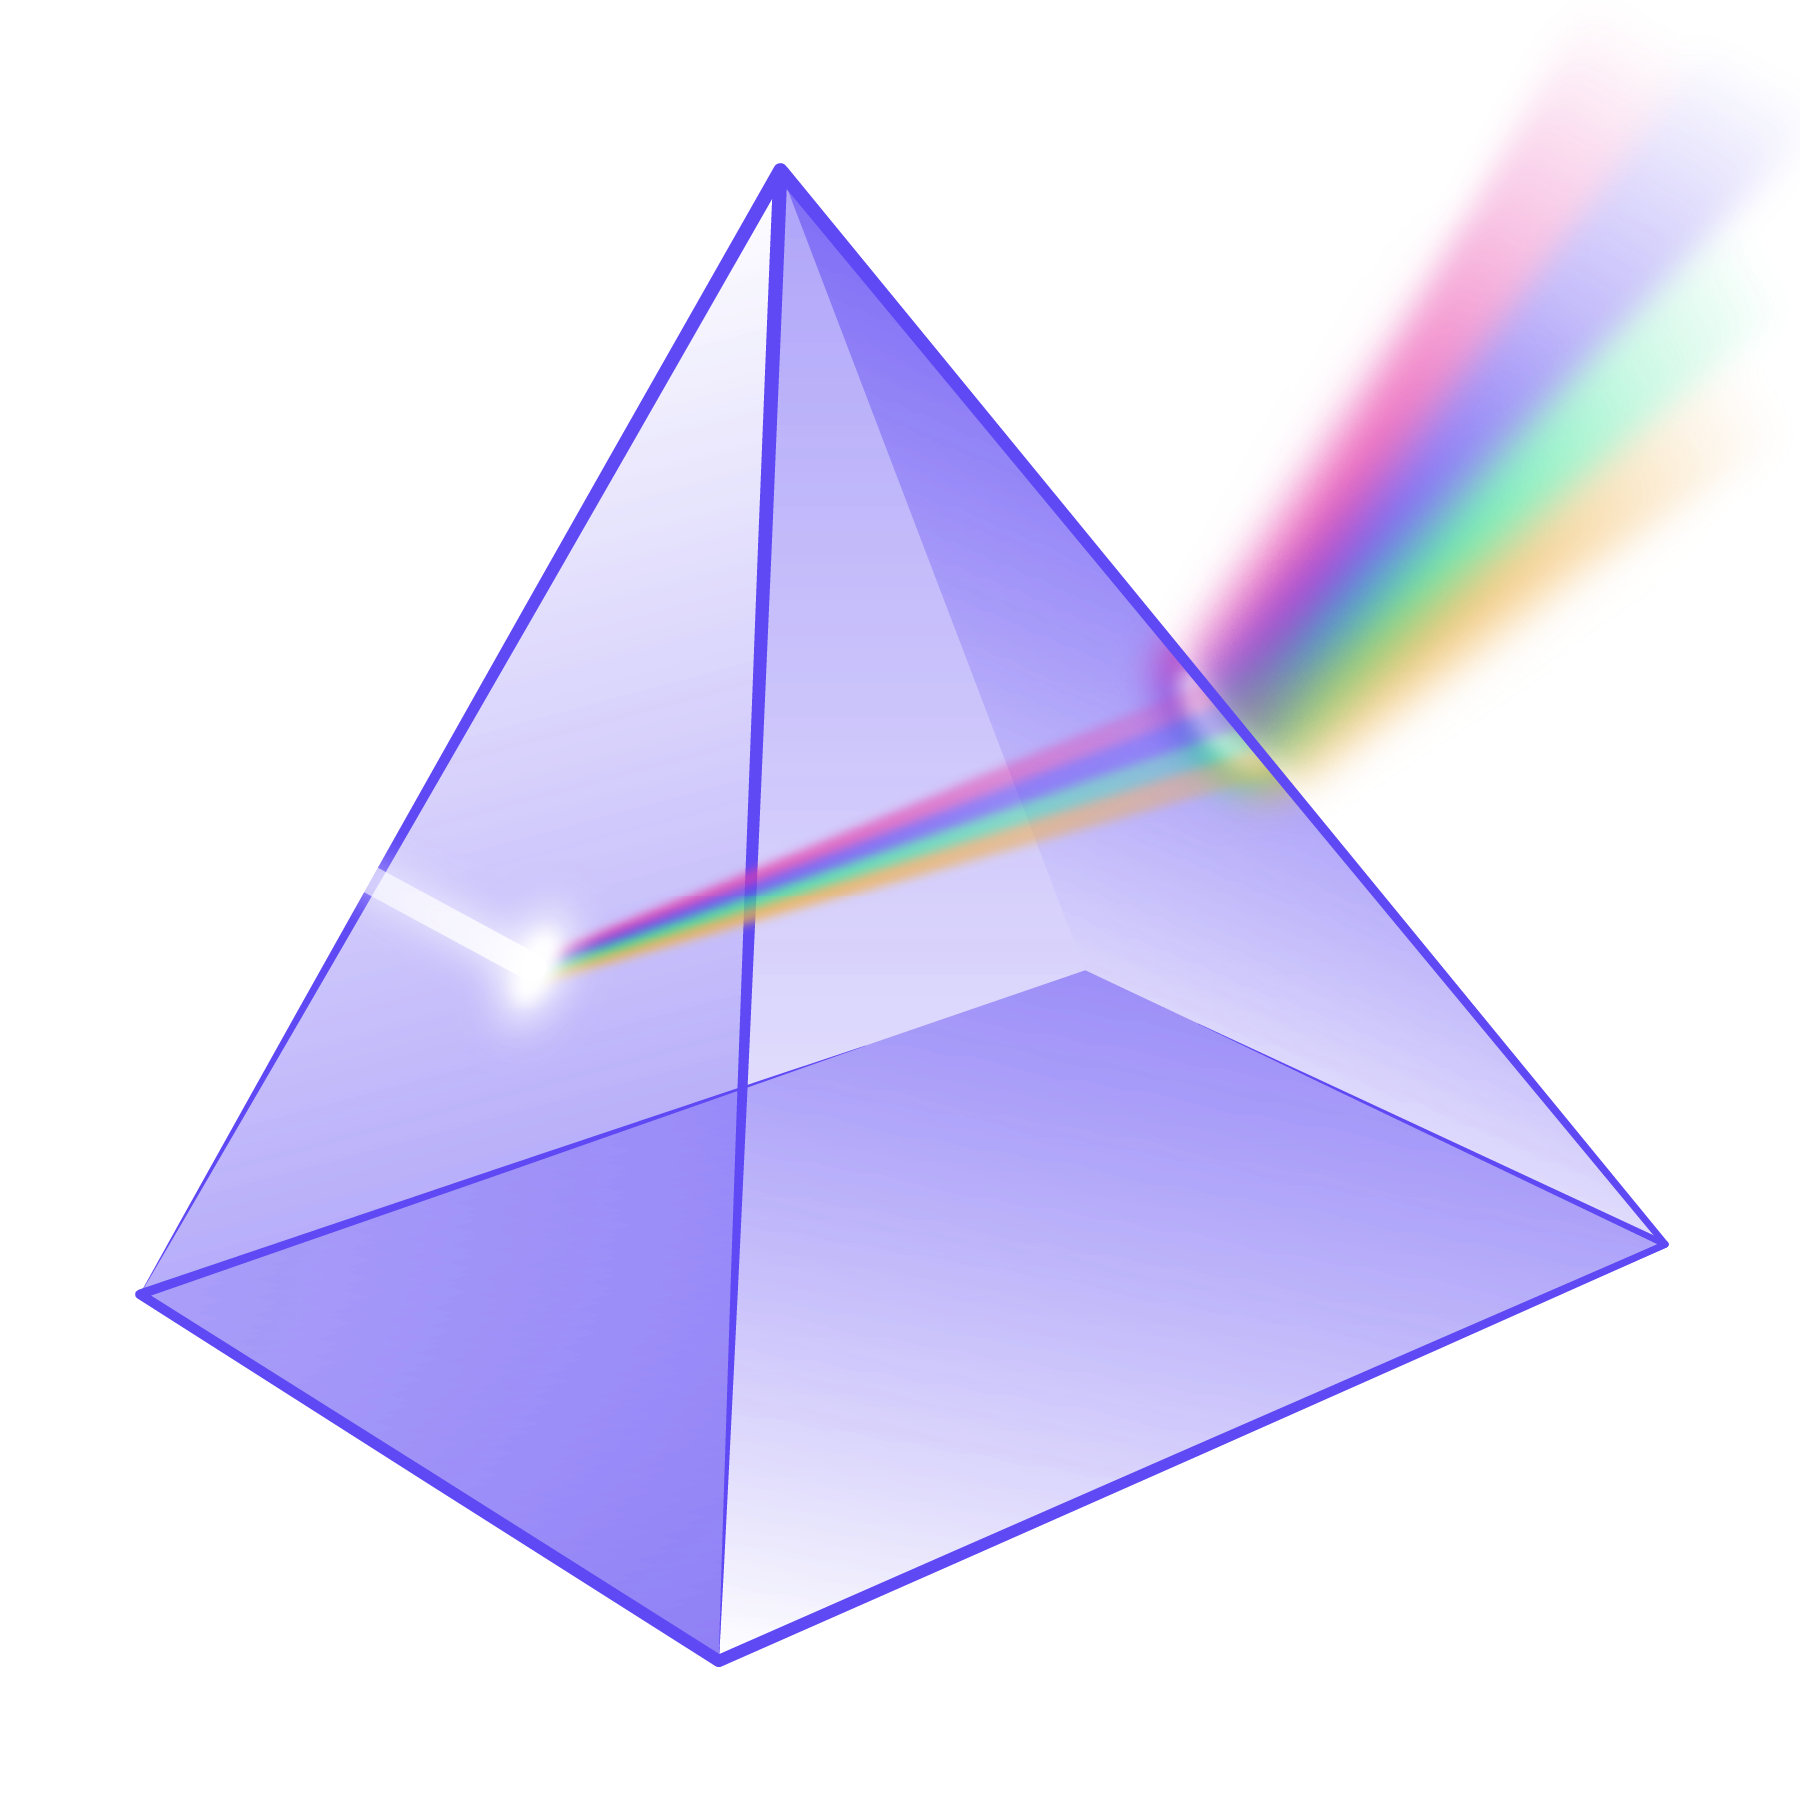 Prism filtering light